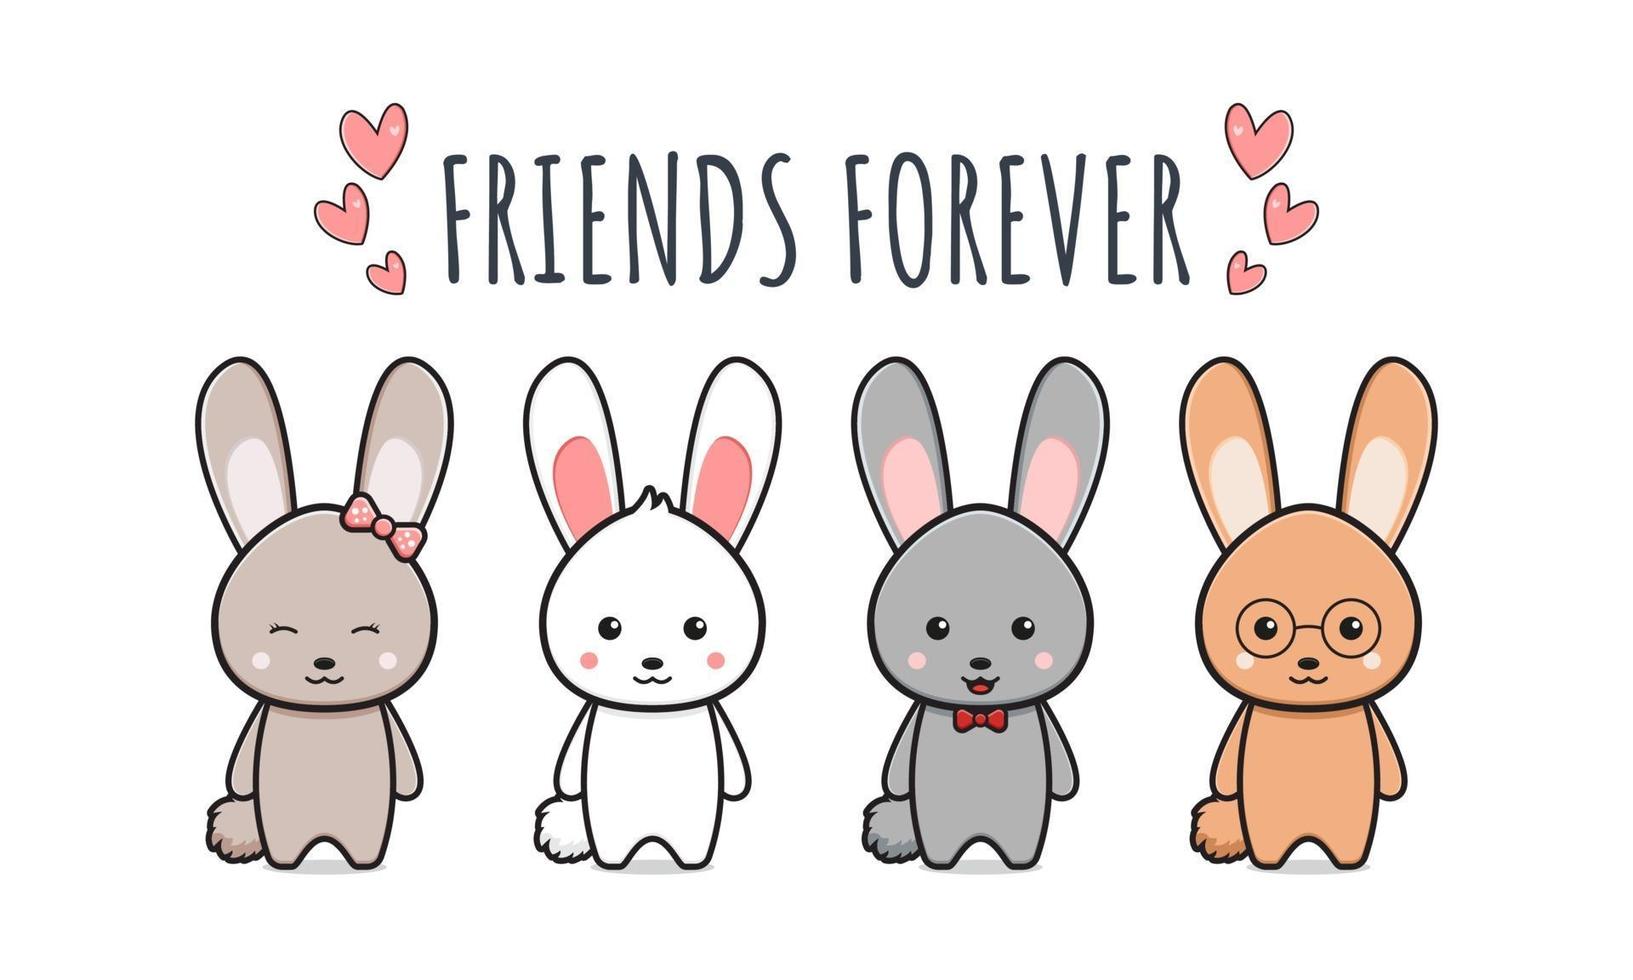 Cute rabbit bunny friends forever wallpaper icon cartoon illustration vector